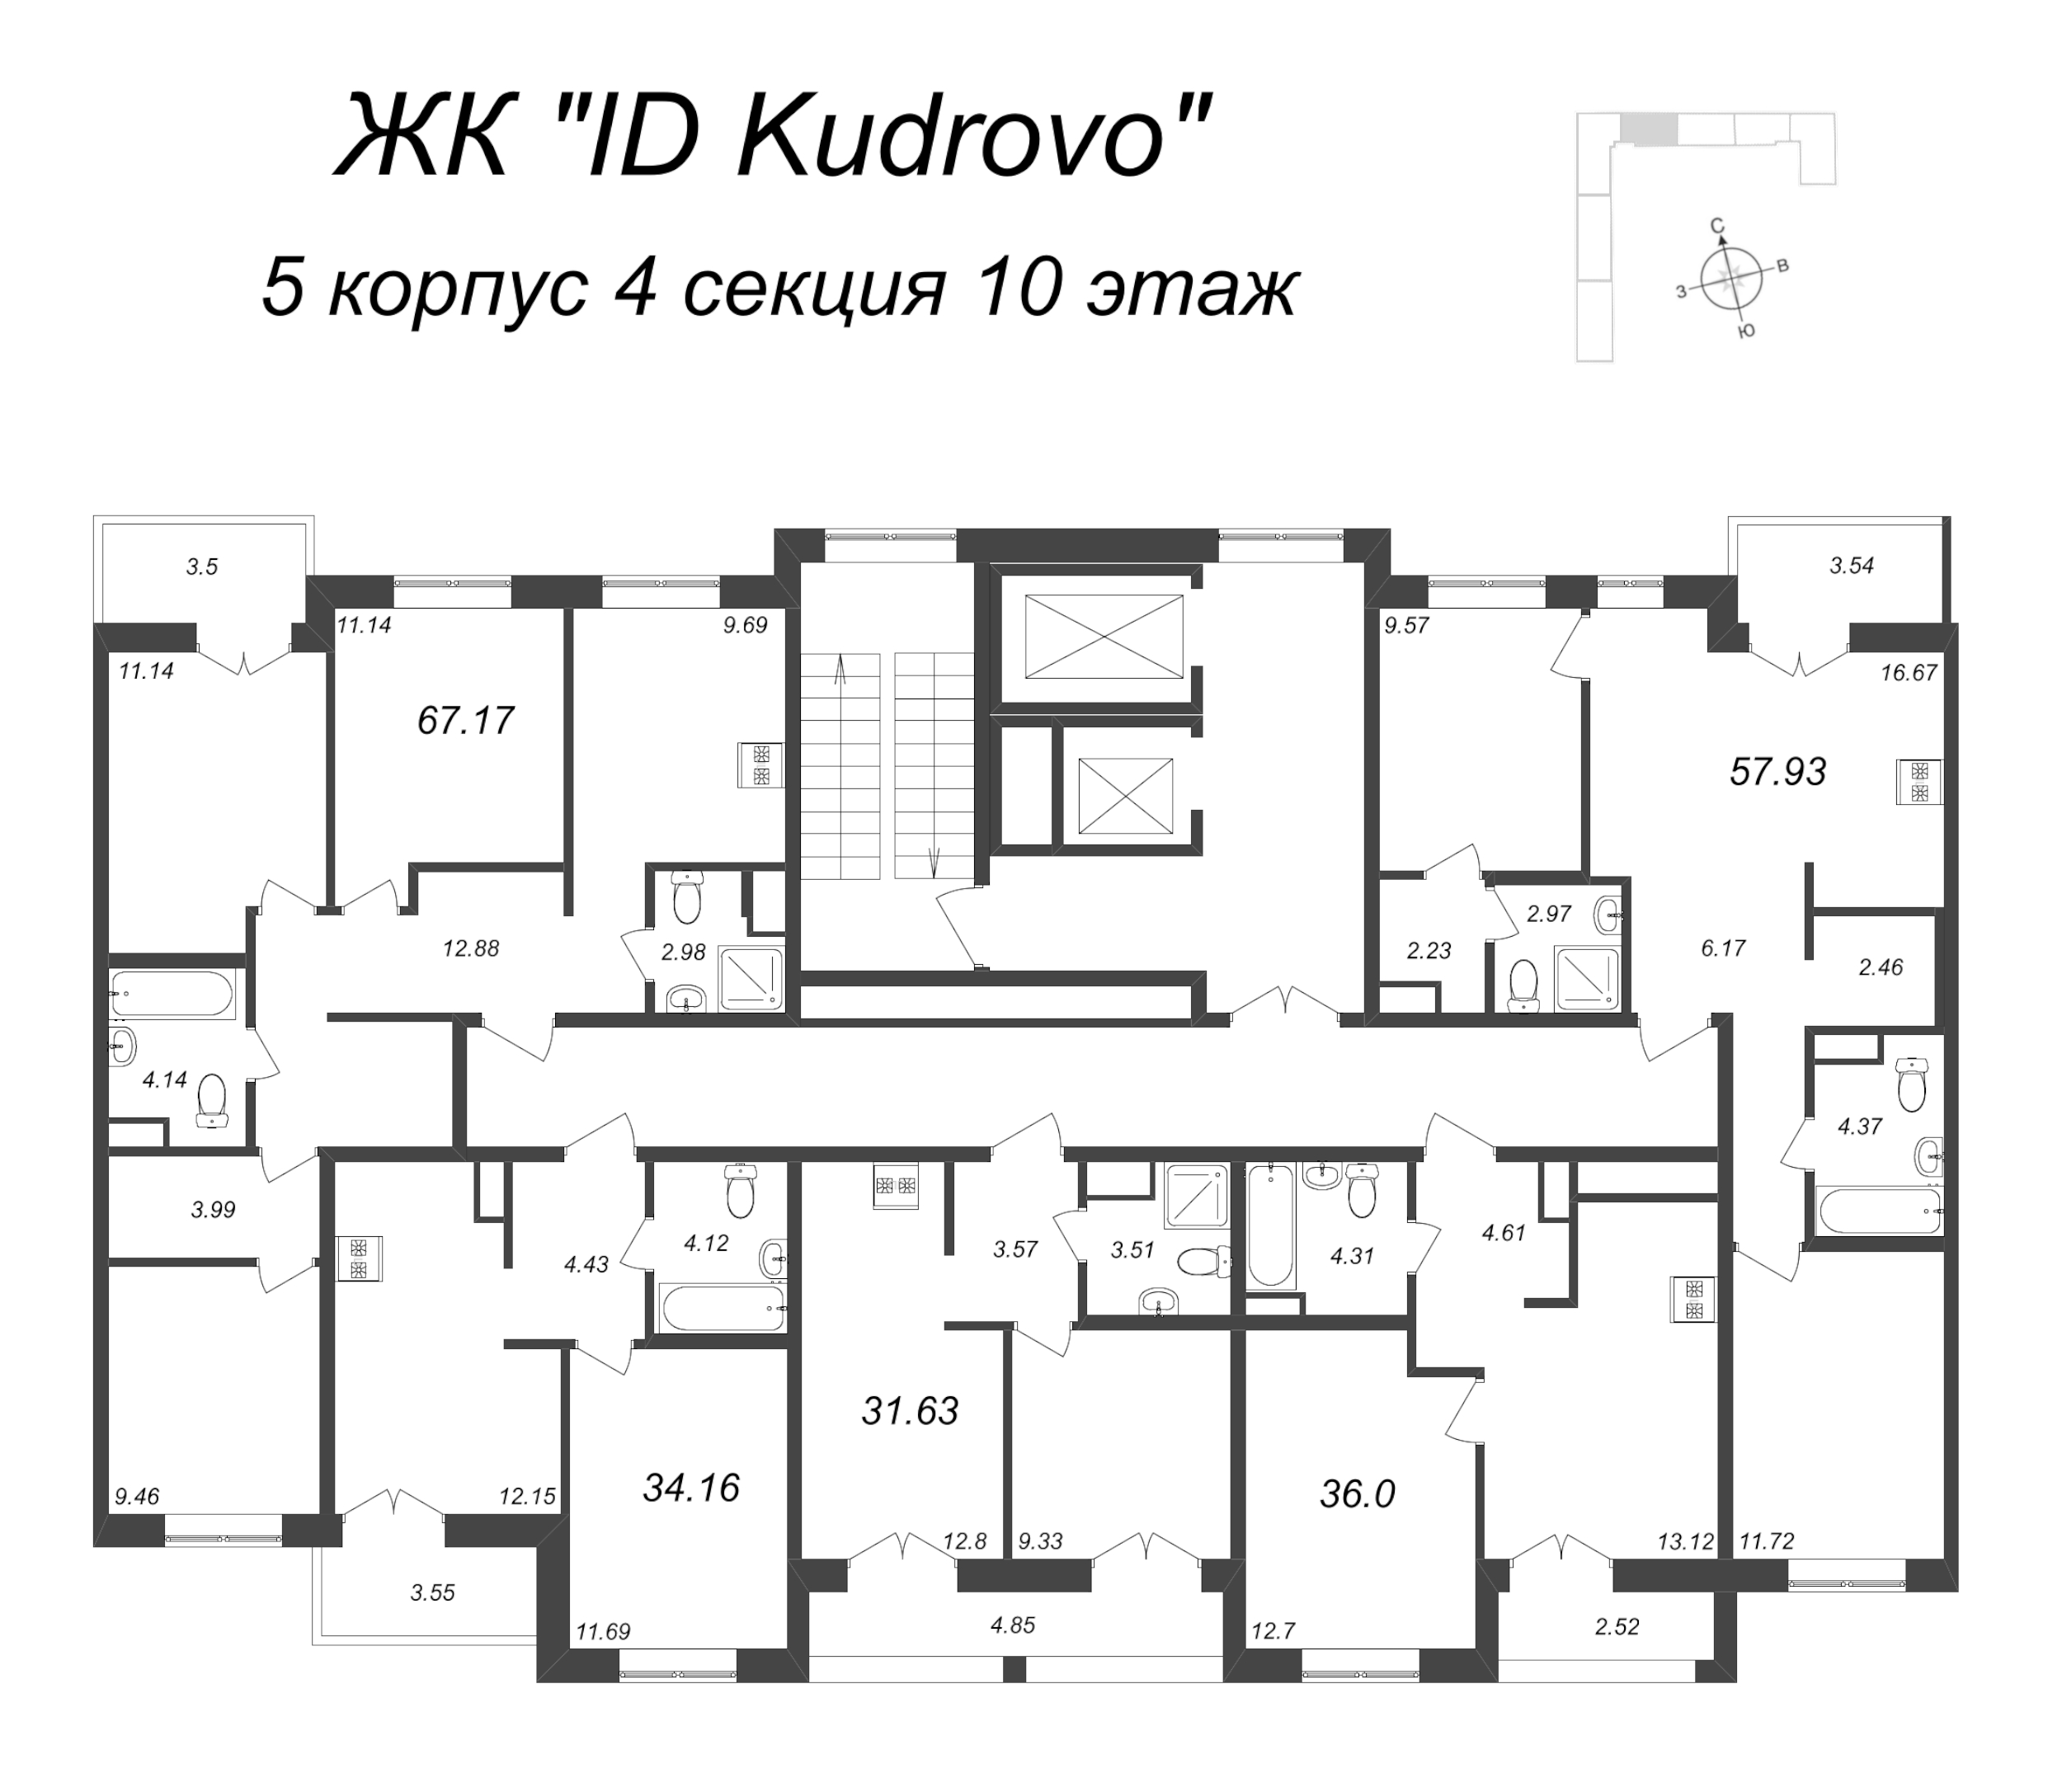 3-комнатная (Евро) квартира, 57.93 м² - планировка этажа